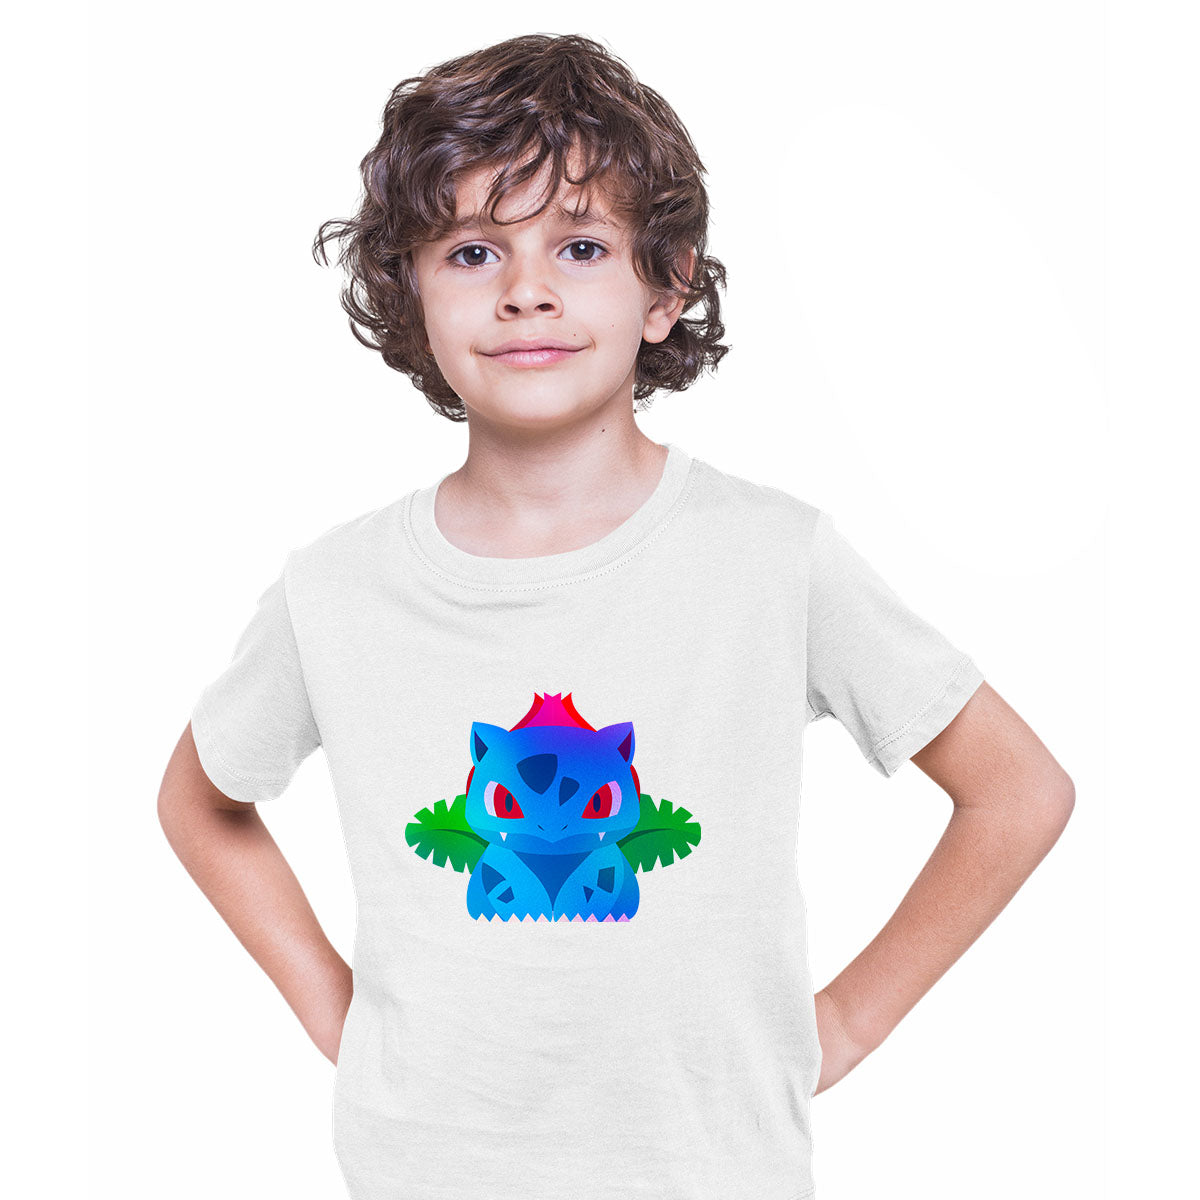 Ivysaur Pokemon Go T-shirt for Kids Boys Girls Brand New - Kuzi Tees